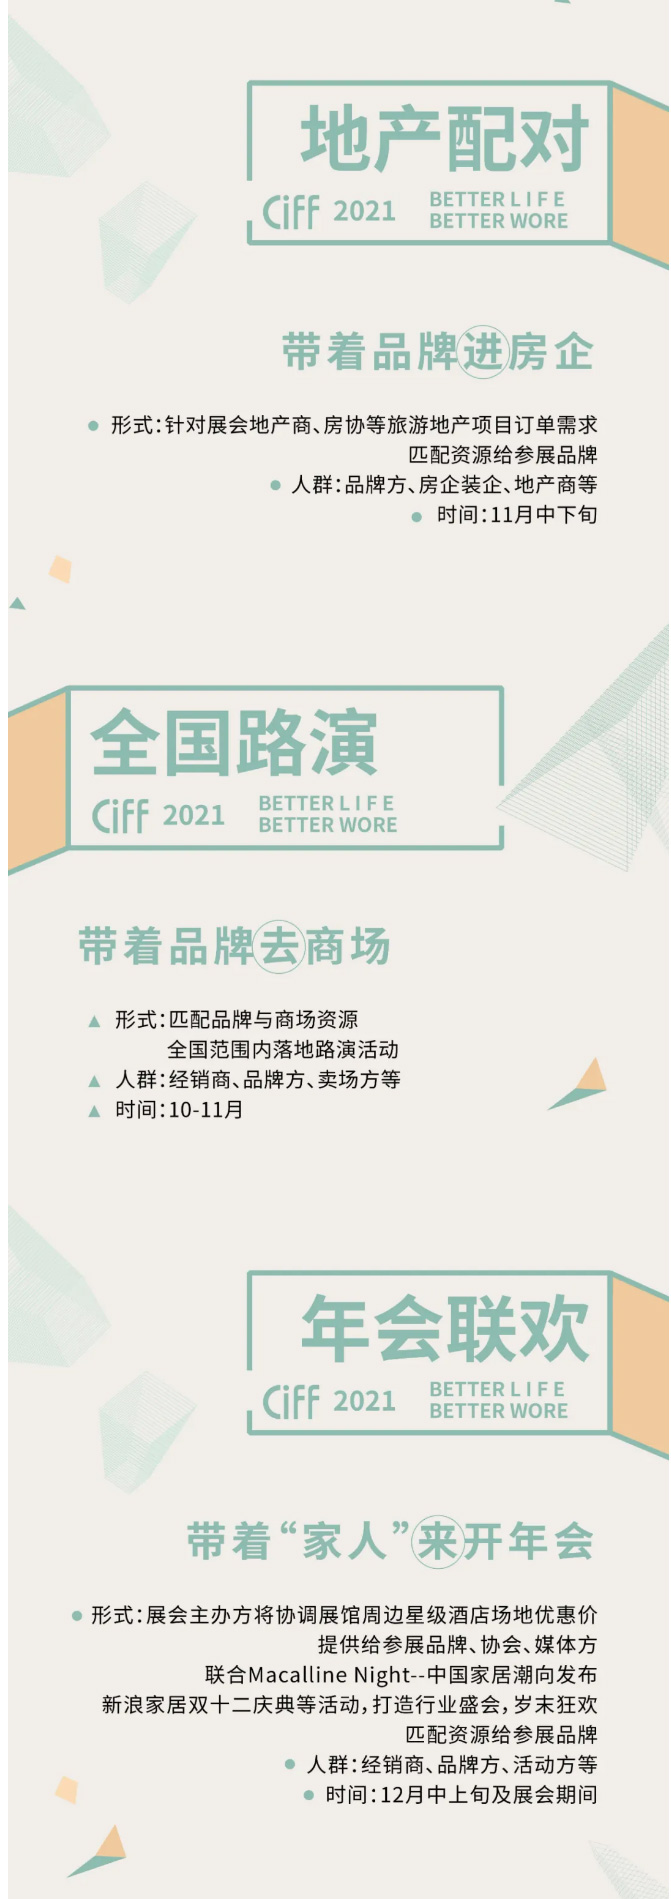 CIFF上海虹桥--增值服务行动方案_02.jpg